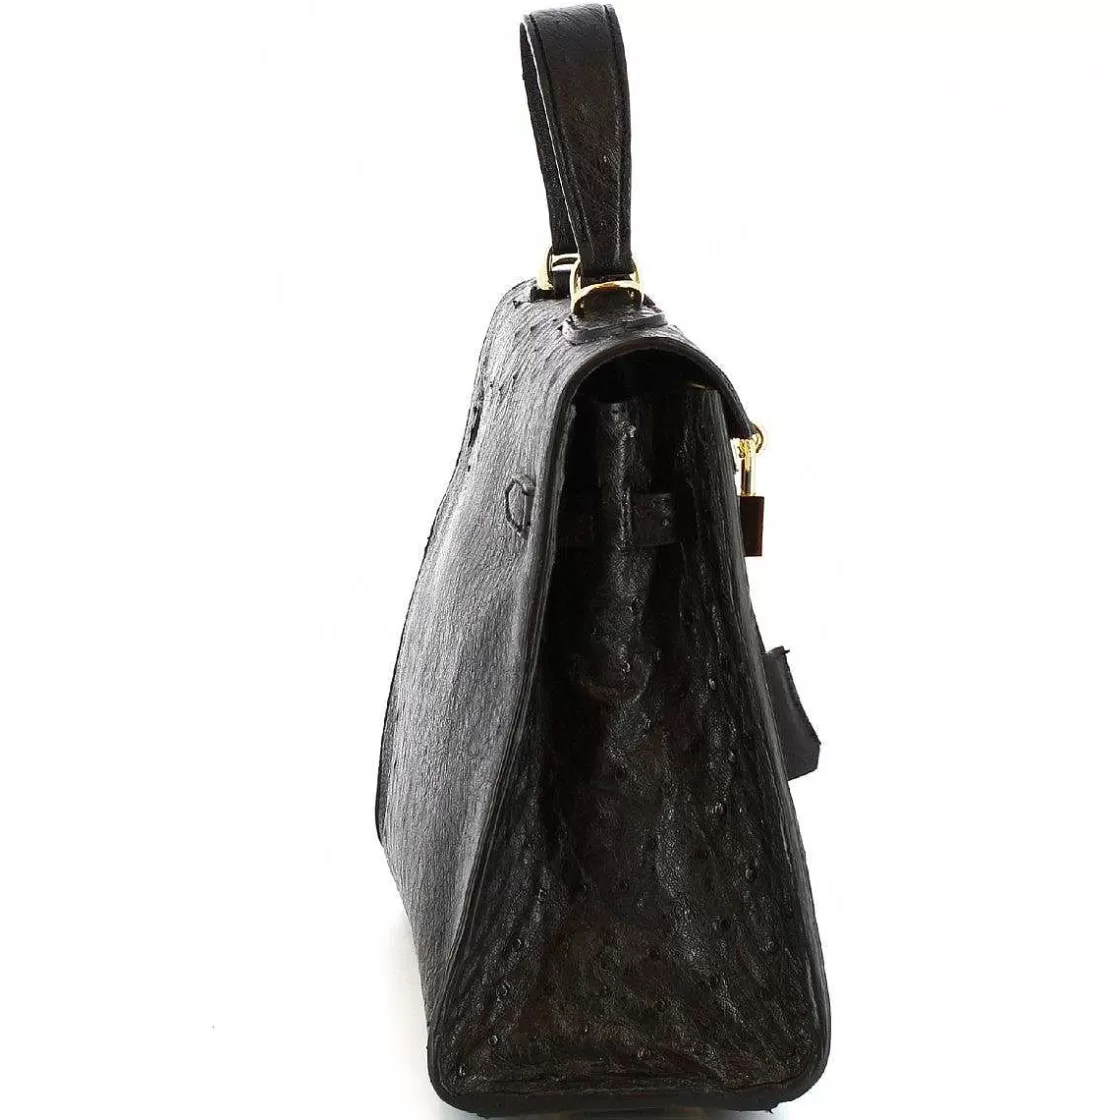 Leonardo Handcrafted Women'S Handbag With Shoulder Strap In Black Ostrich Leather Best Sale